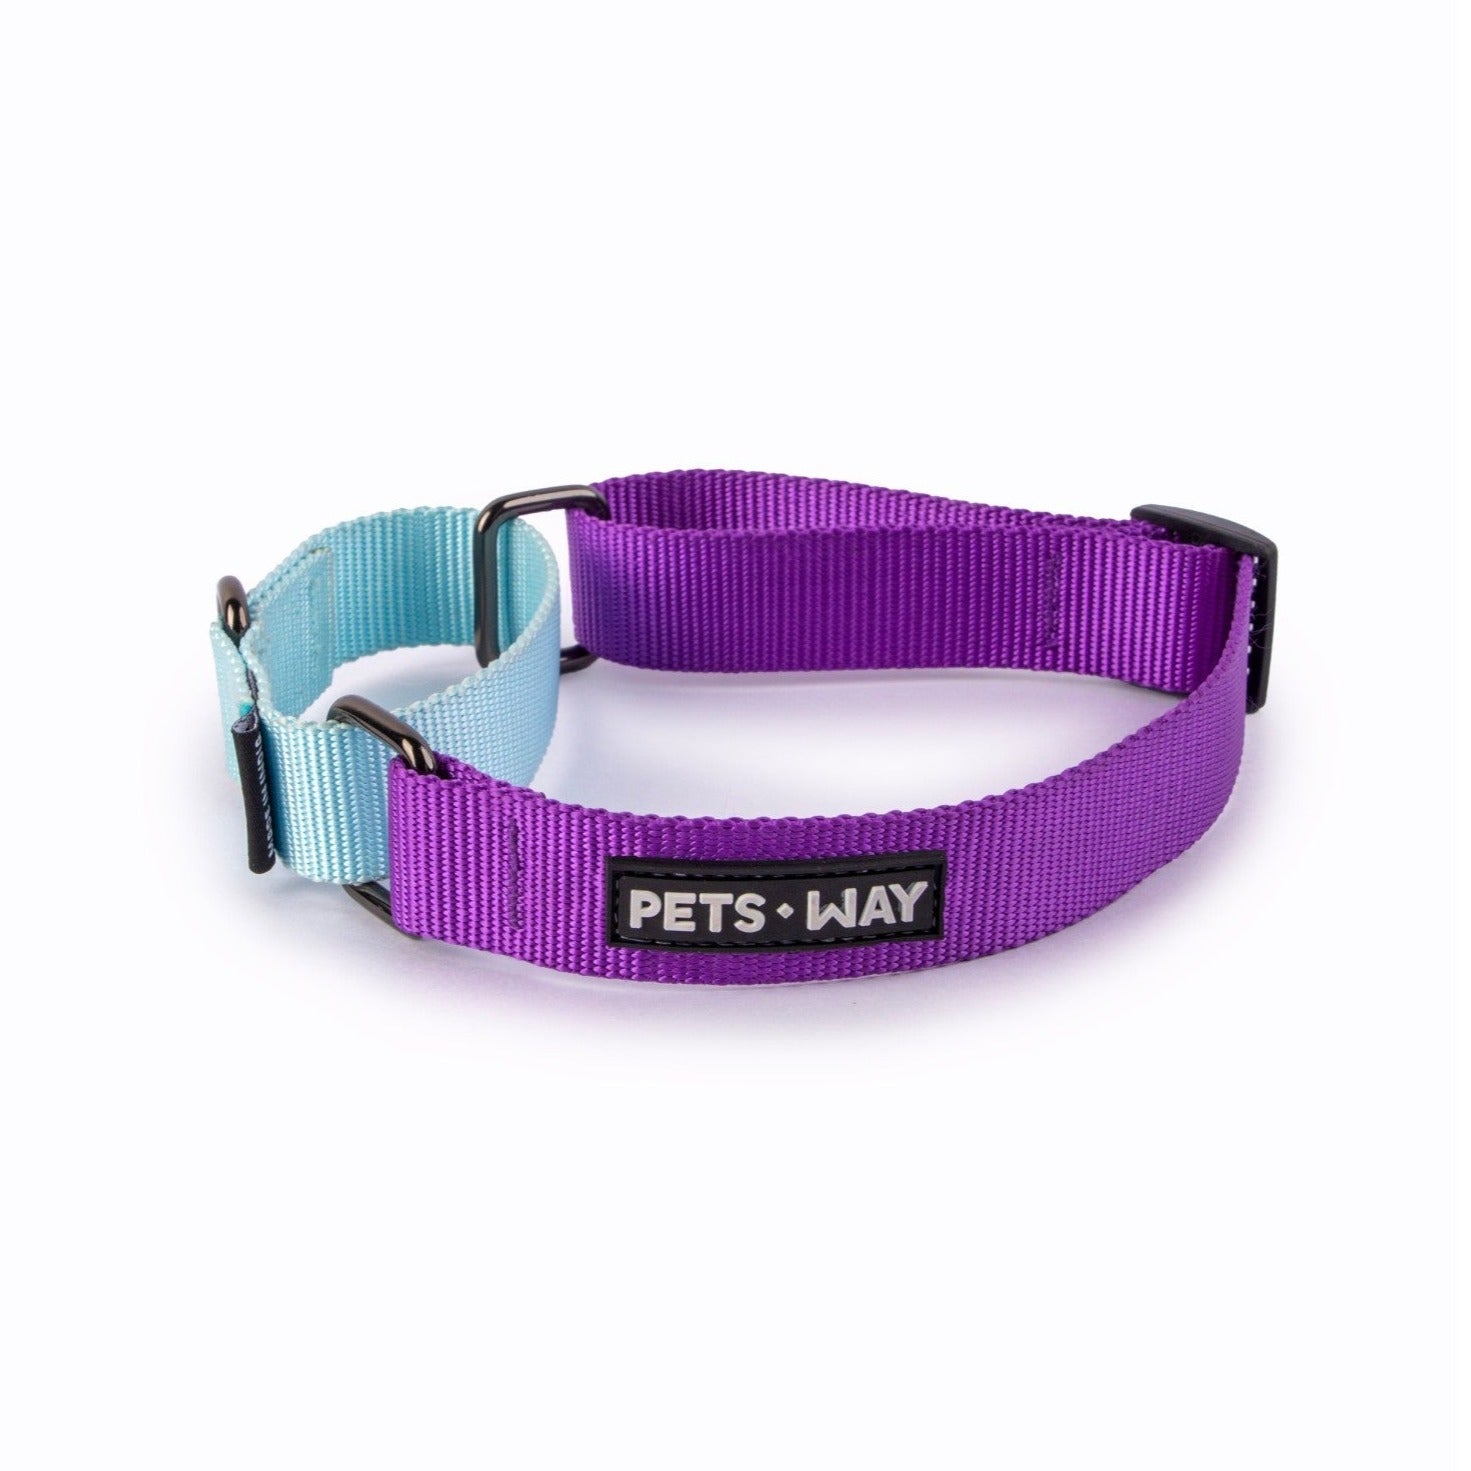 Pets Way Martingale Collar - Amethyst & Sky